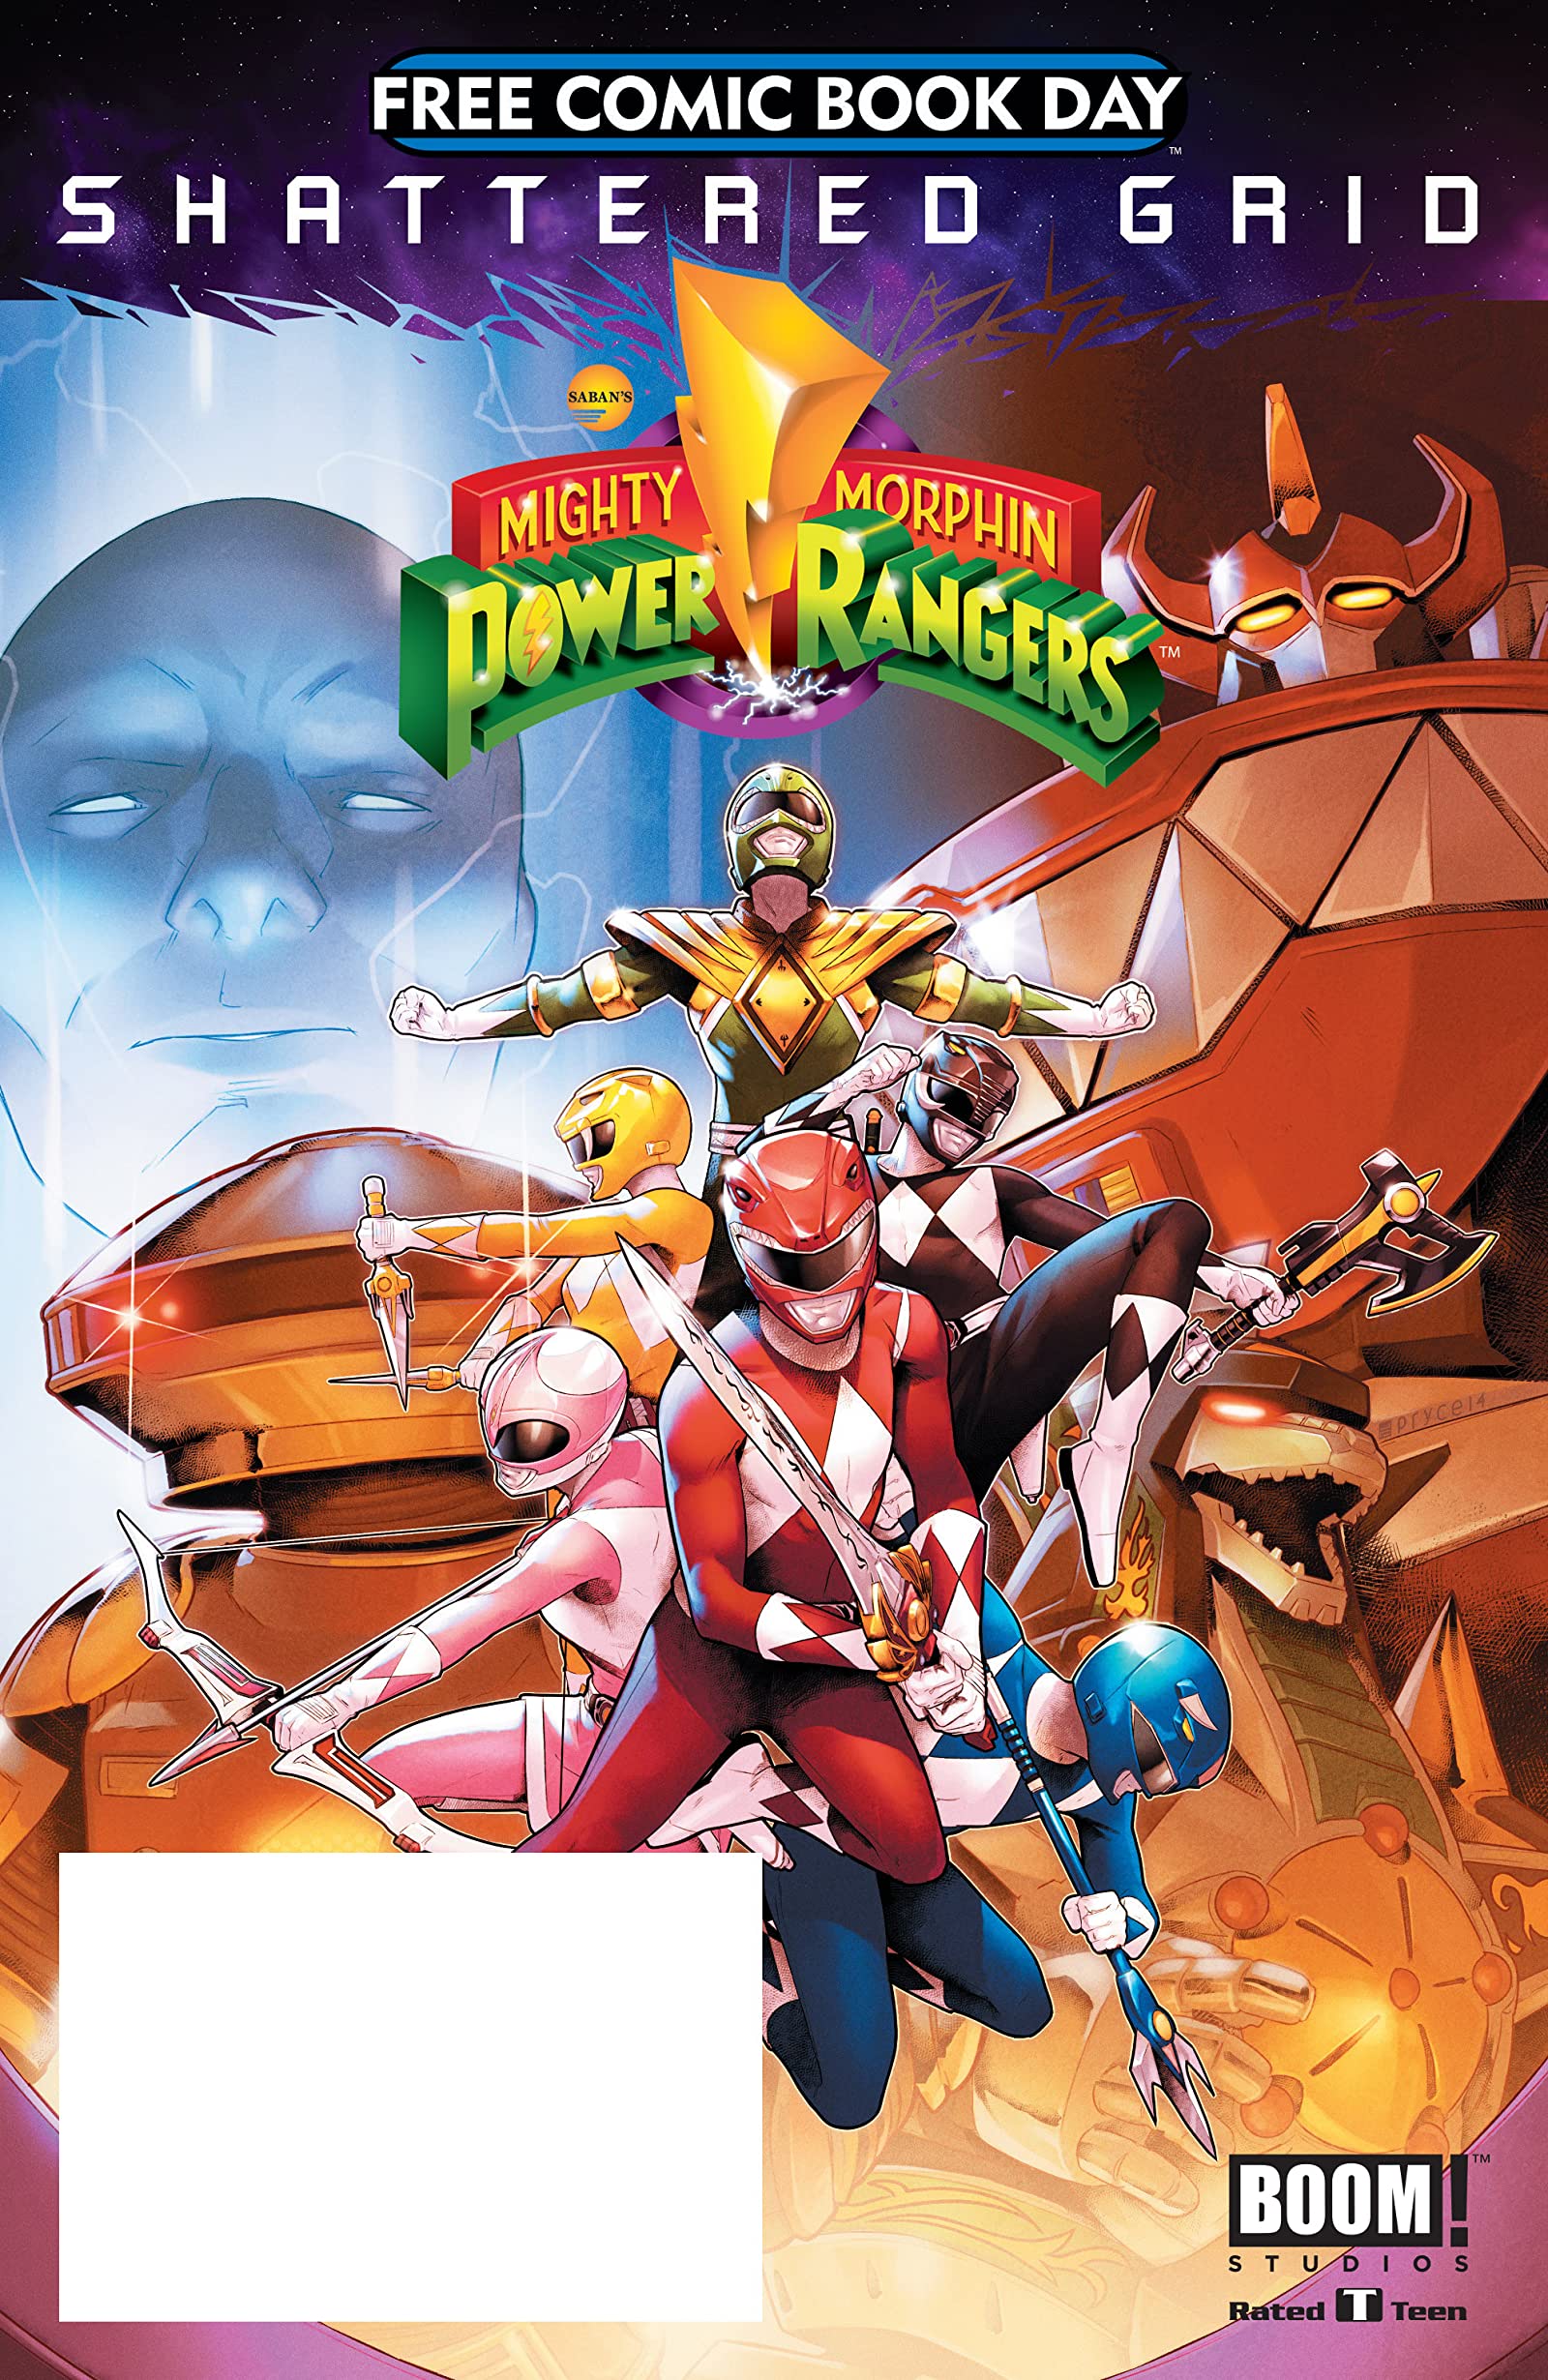 Mighty Morphin Power Rangers FCBD 2018 Special